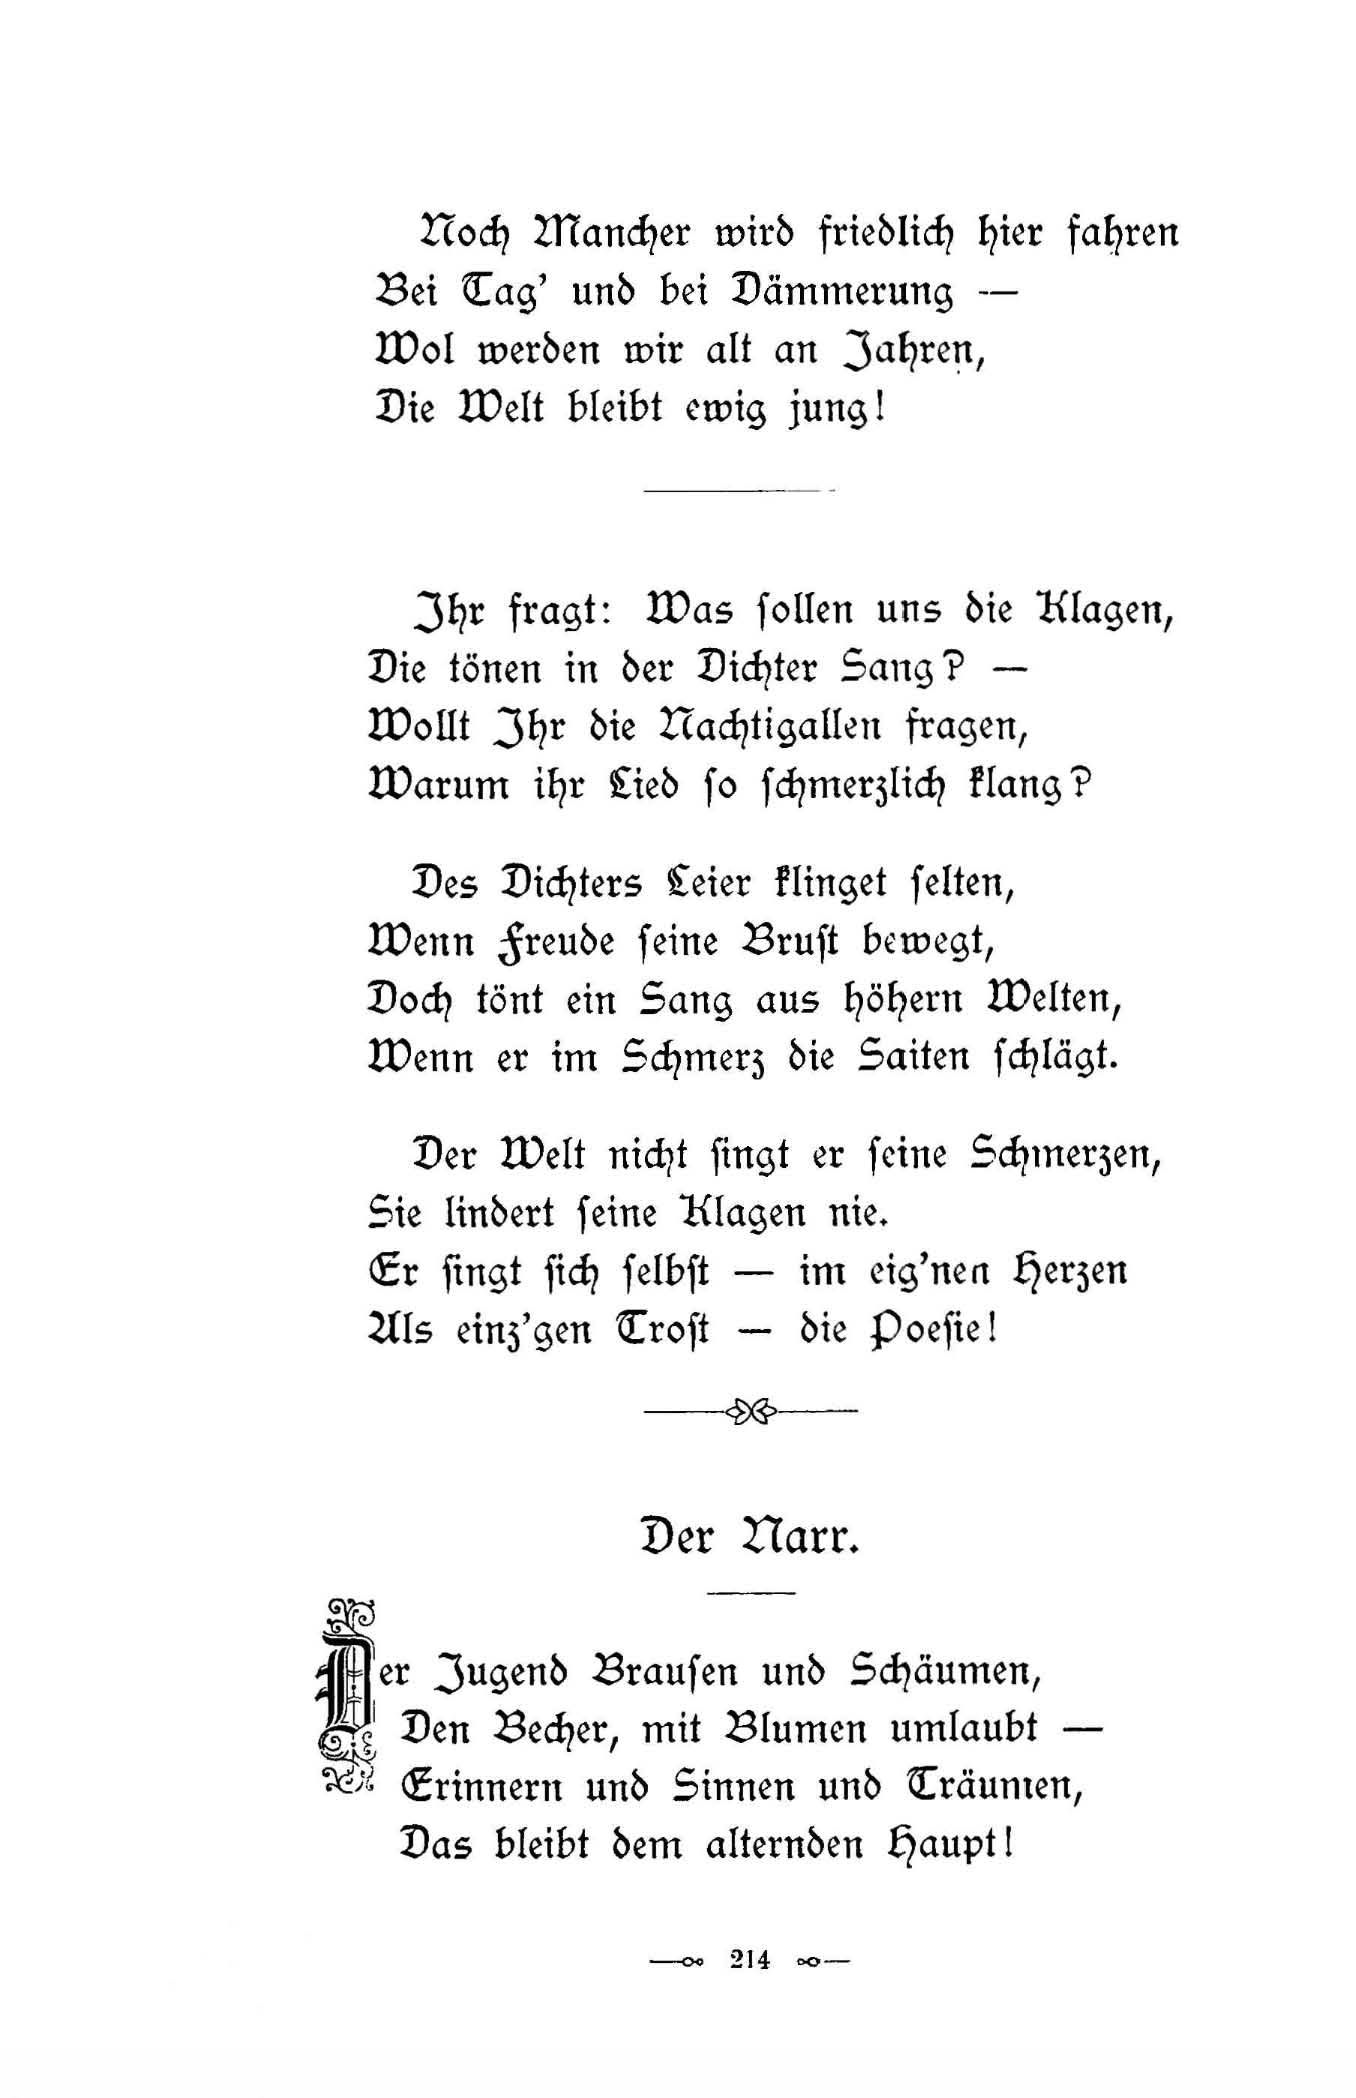 Der Narr (1896) | 1. (214) Основной текст